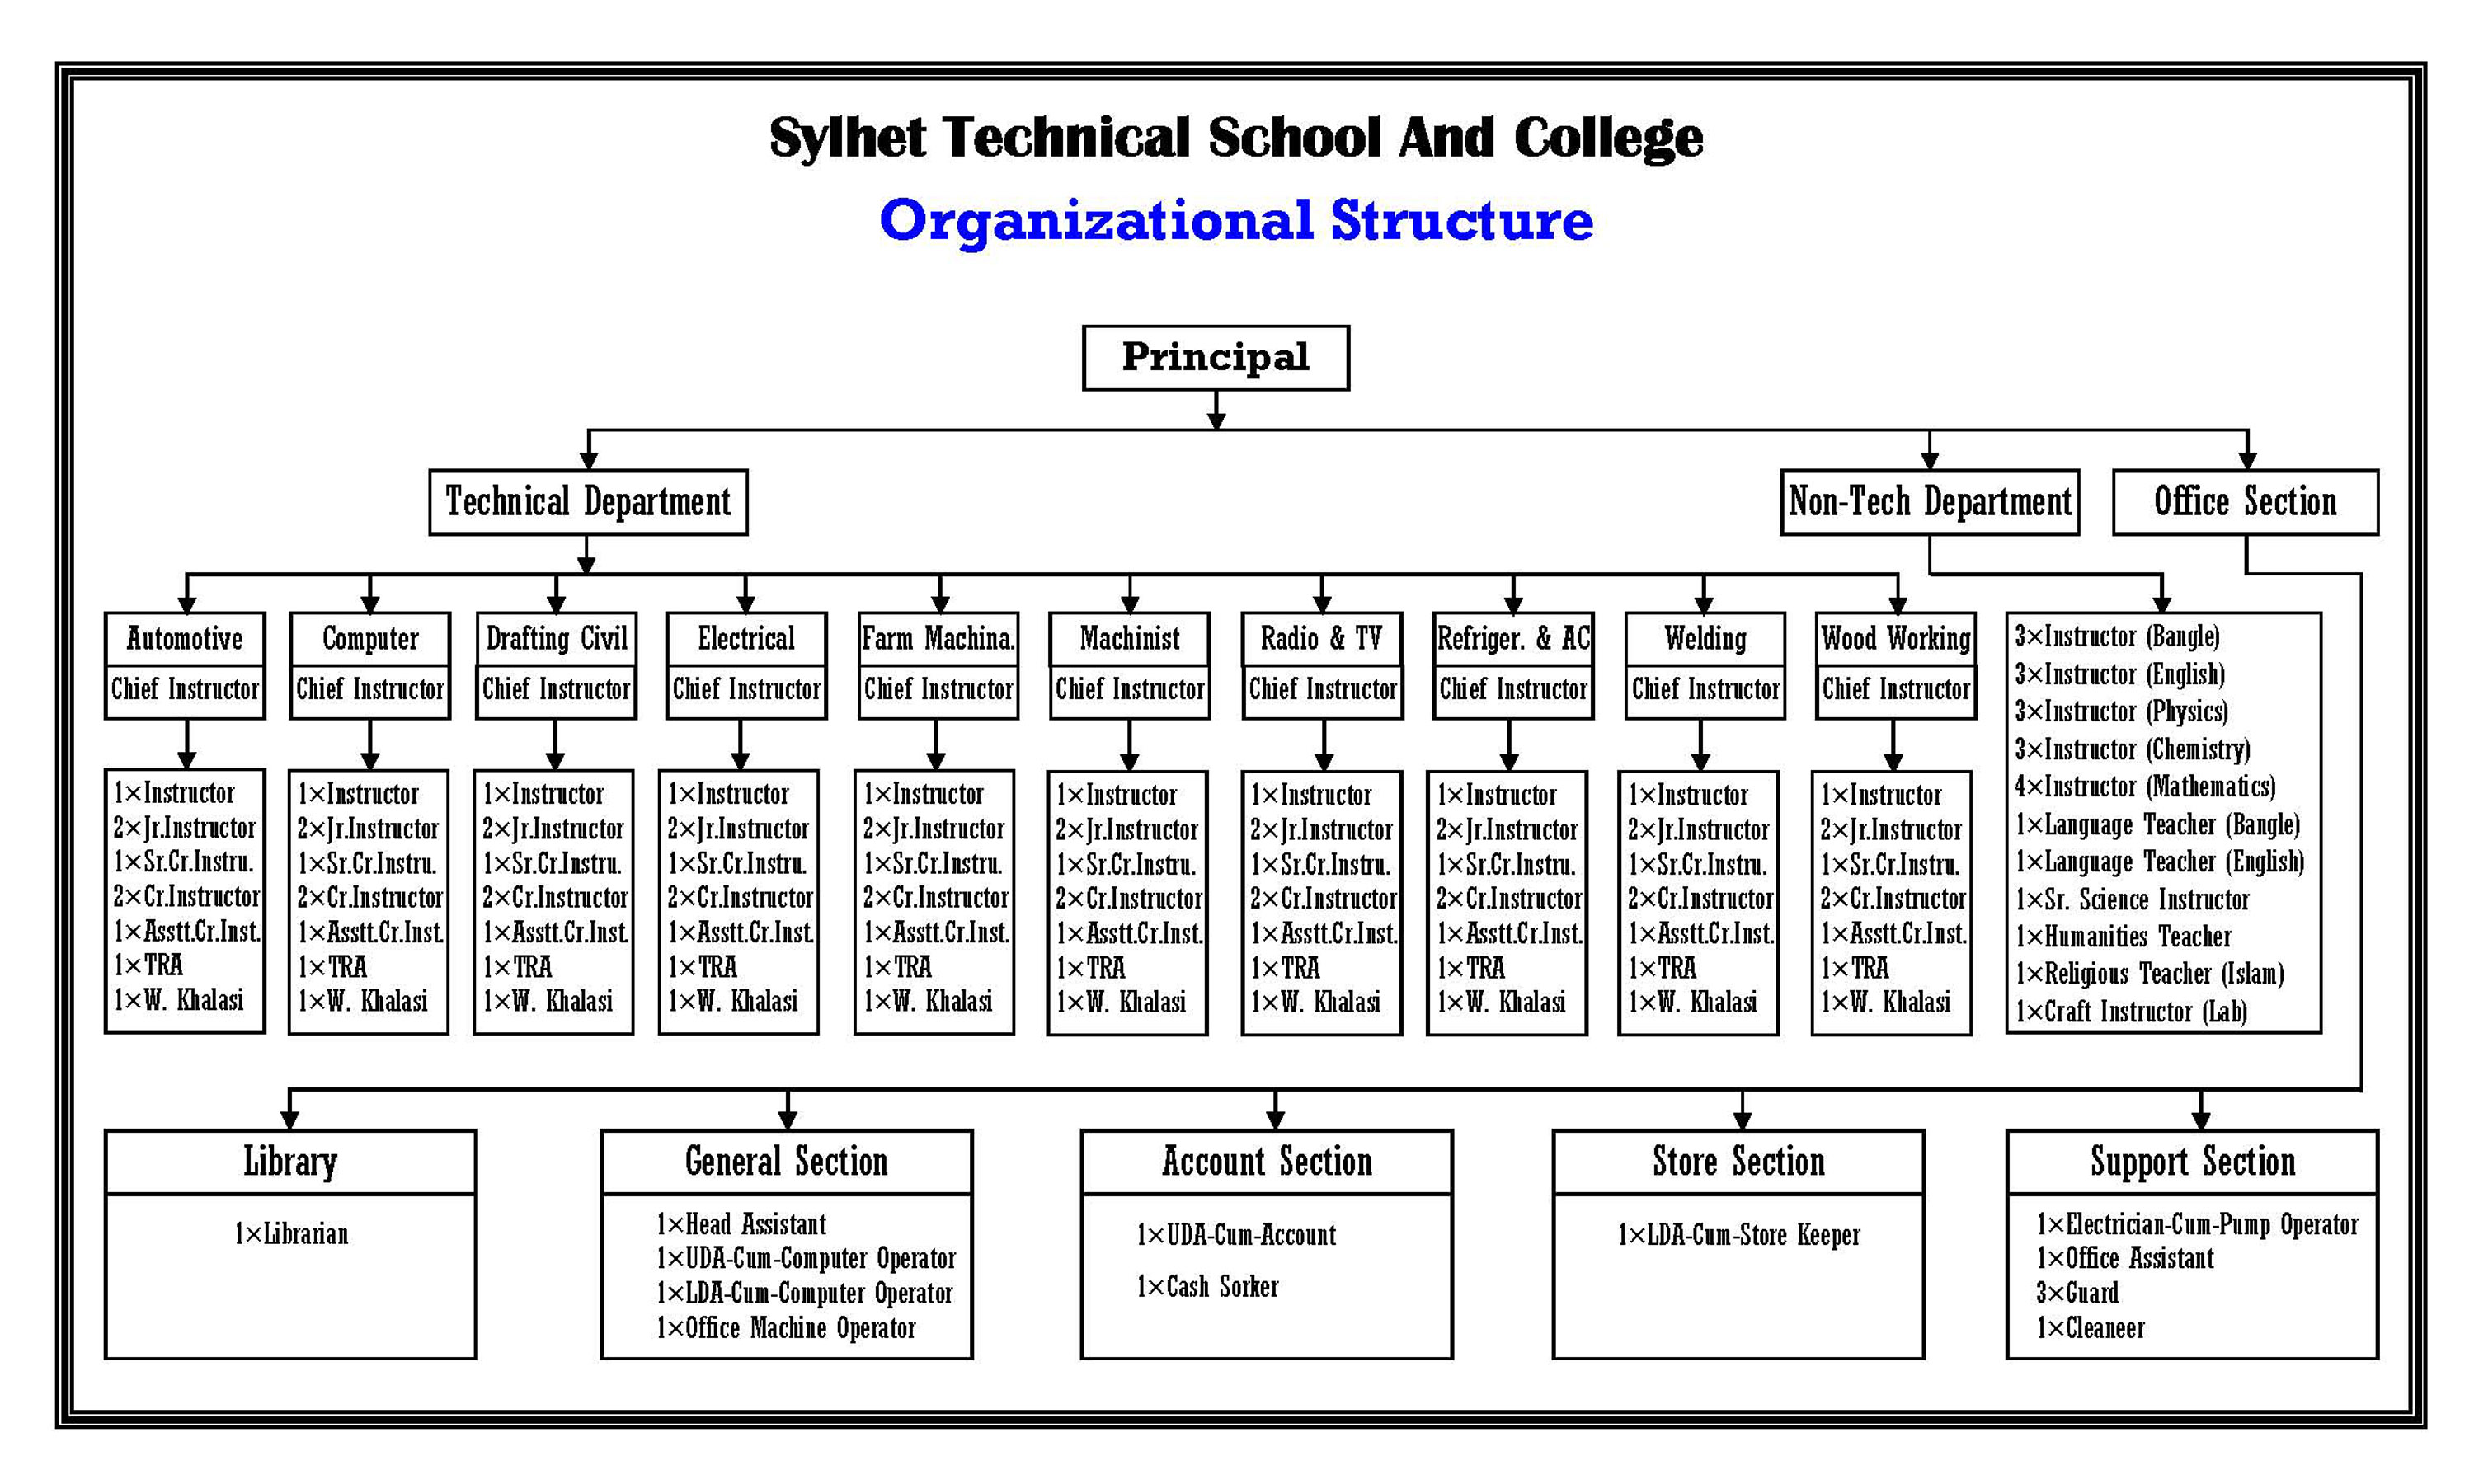 Organizational Structure of Sylhet TSC